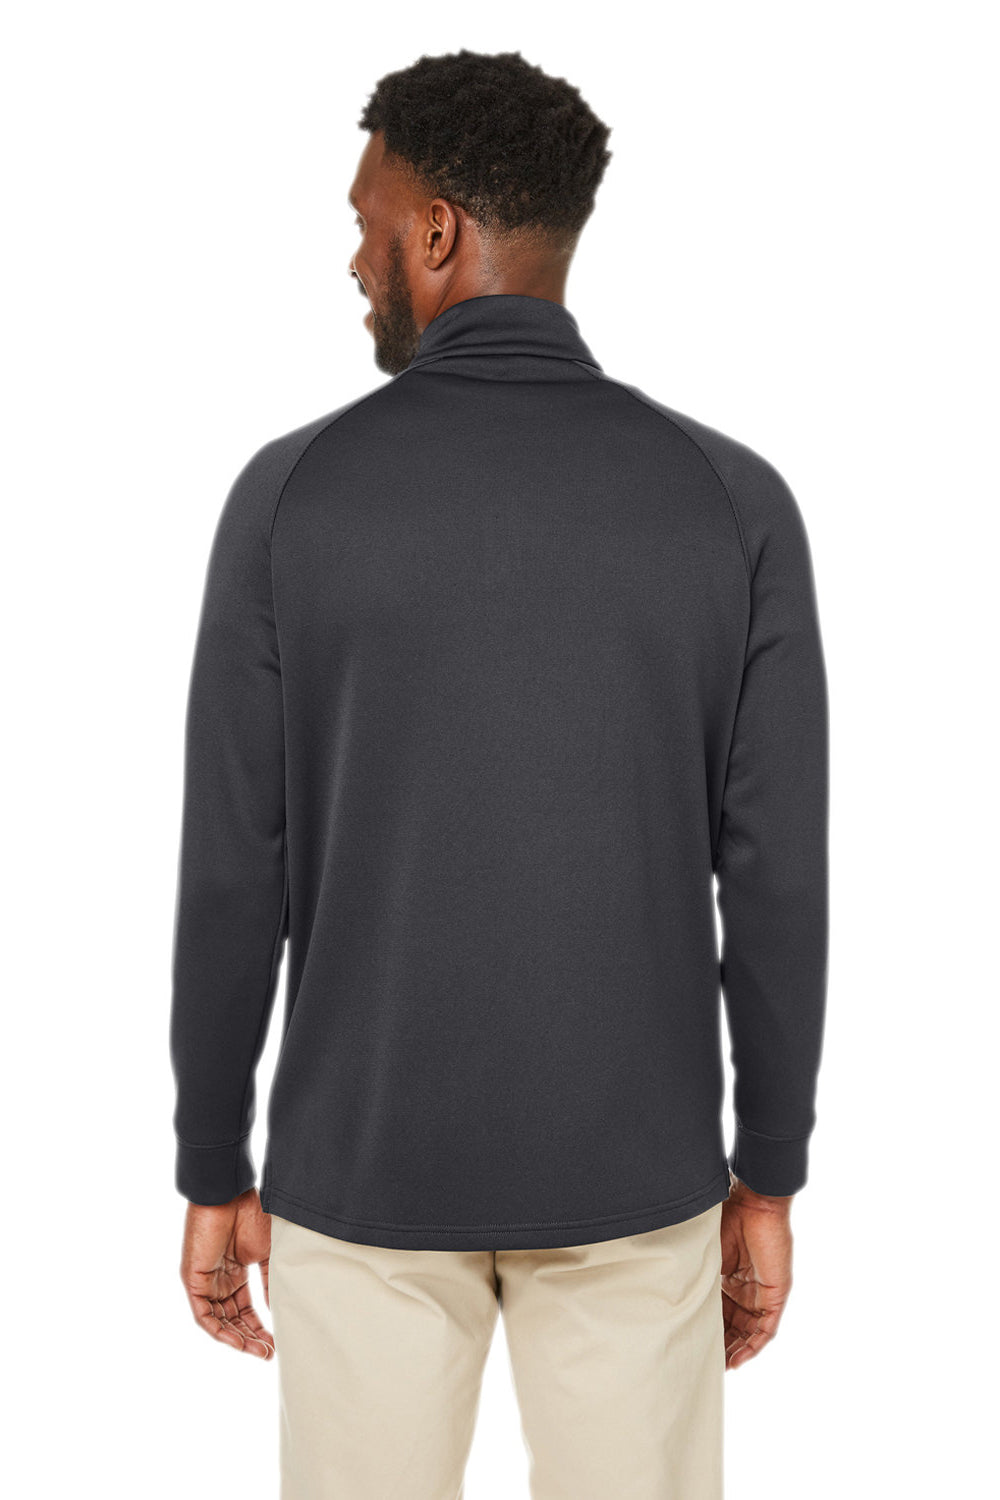 Core 365 CE801 Mens Fusion ChromaSoft Fleece 1/4 Zip Sweatshirt Carbon Grey Back